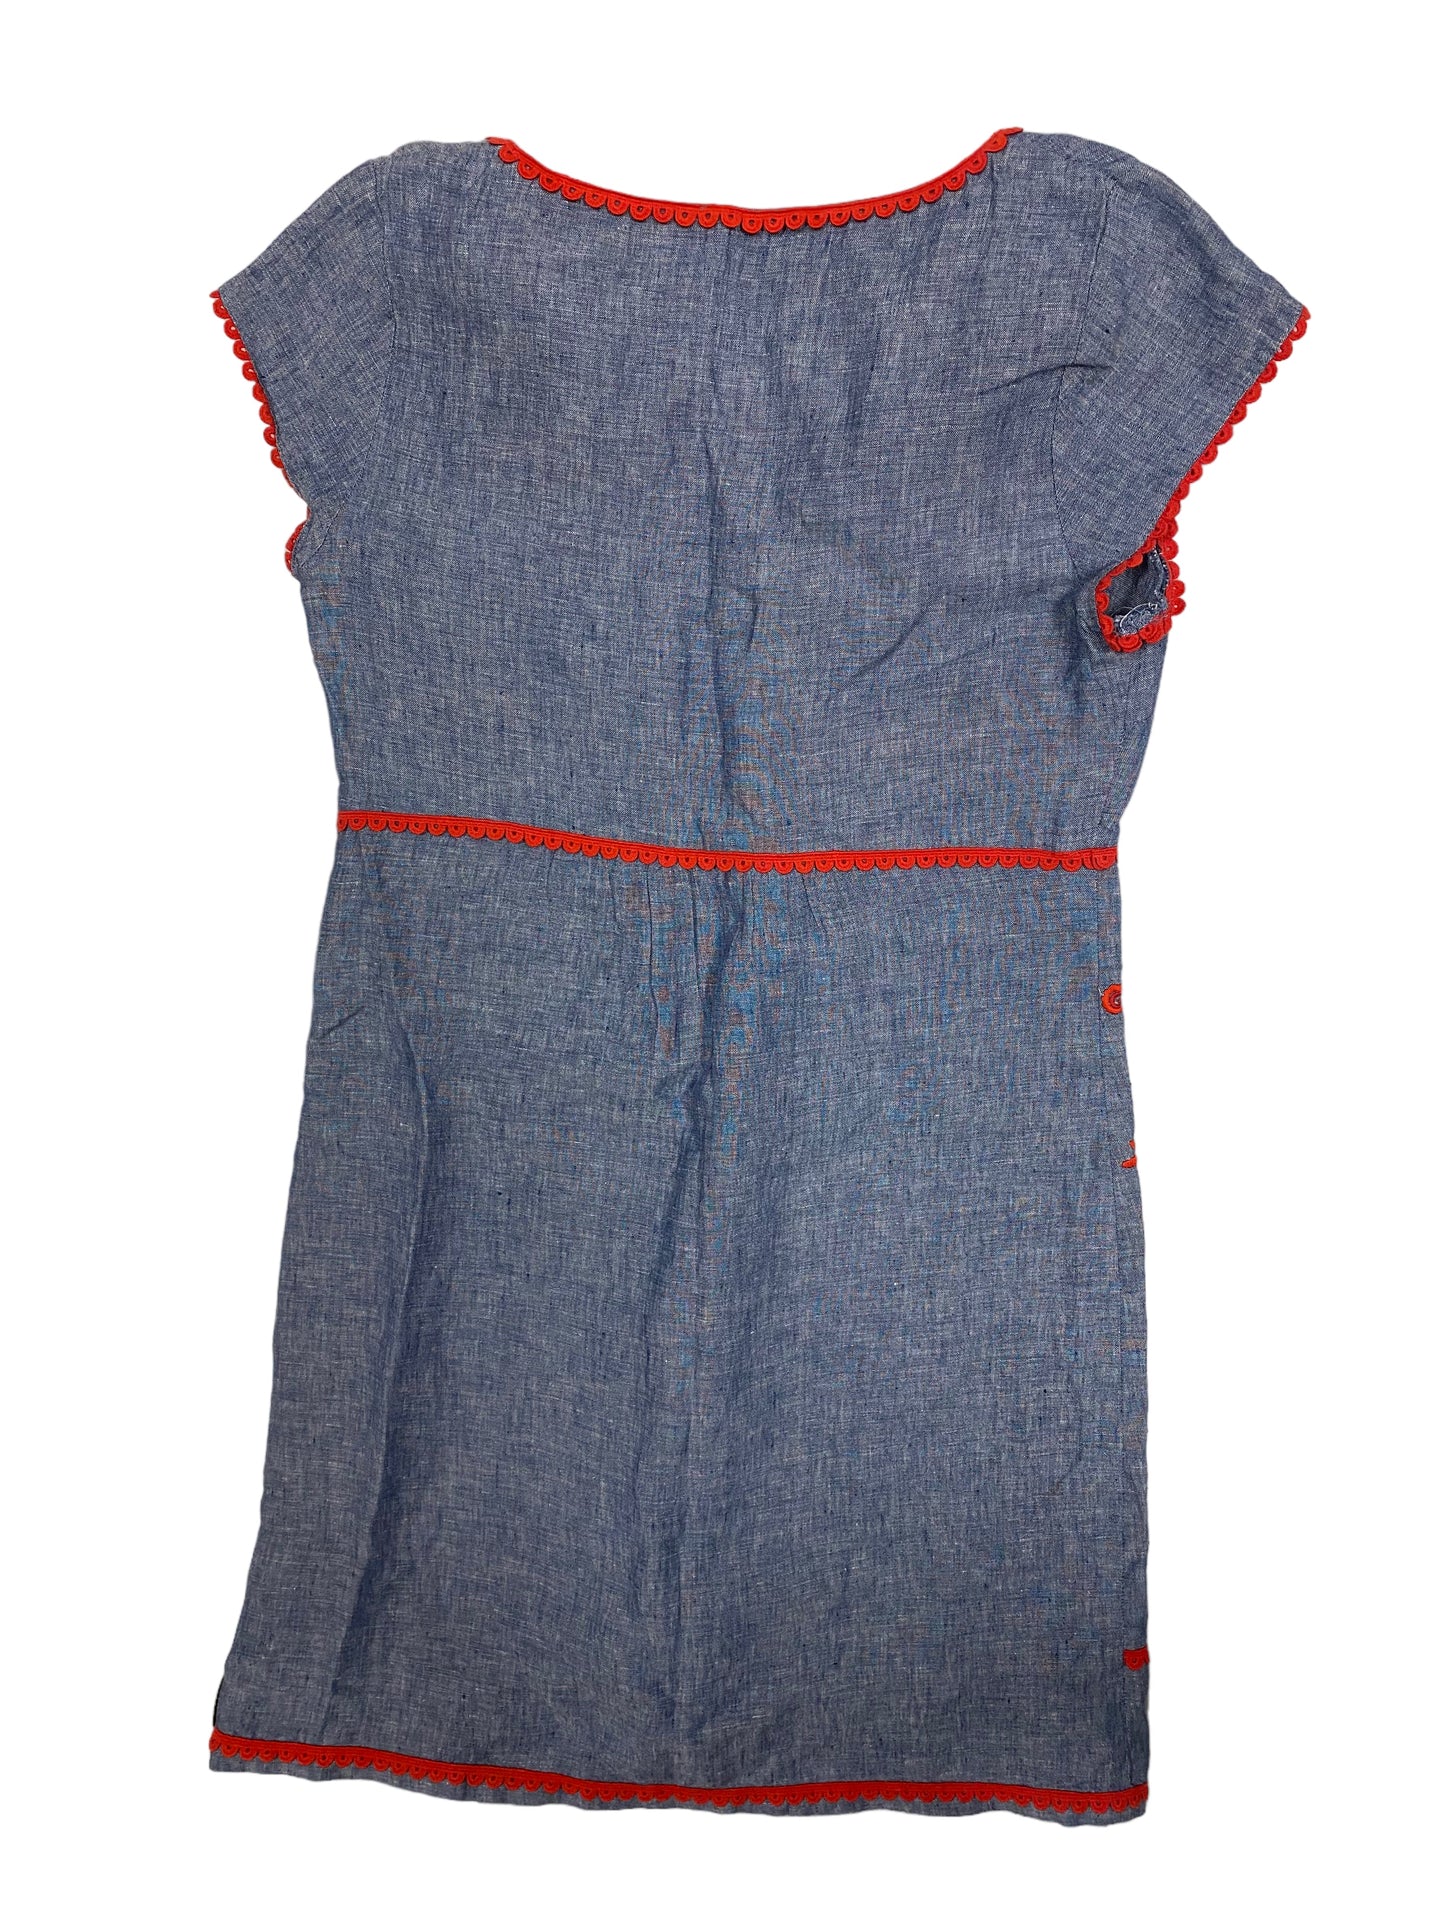 Multi-colored Dress Casual Short Boden, Size 8